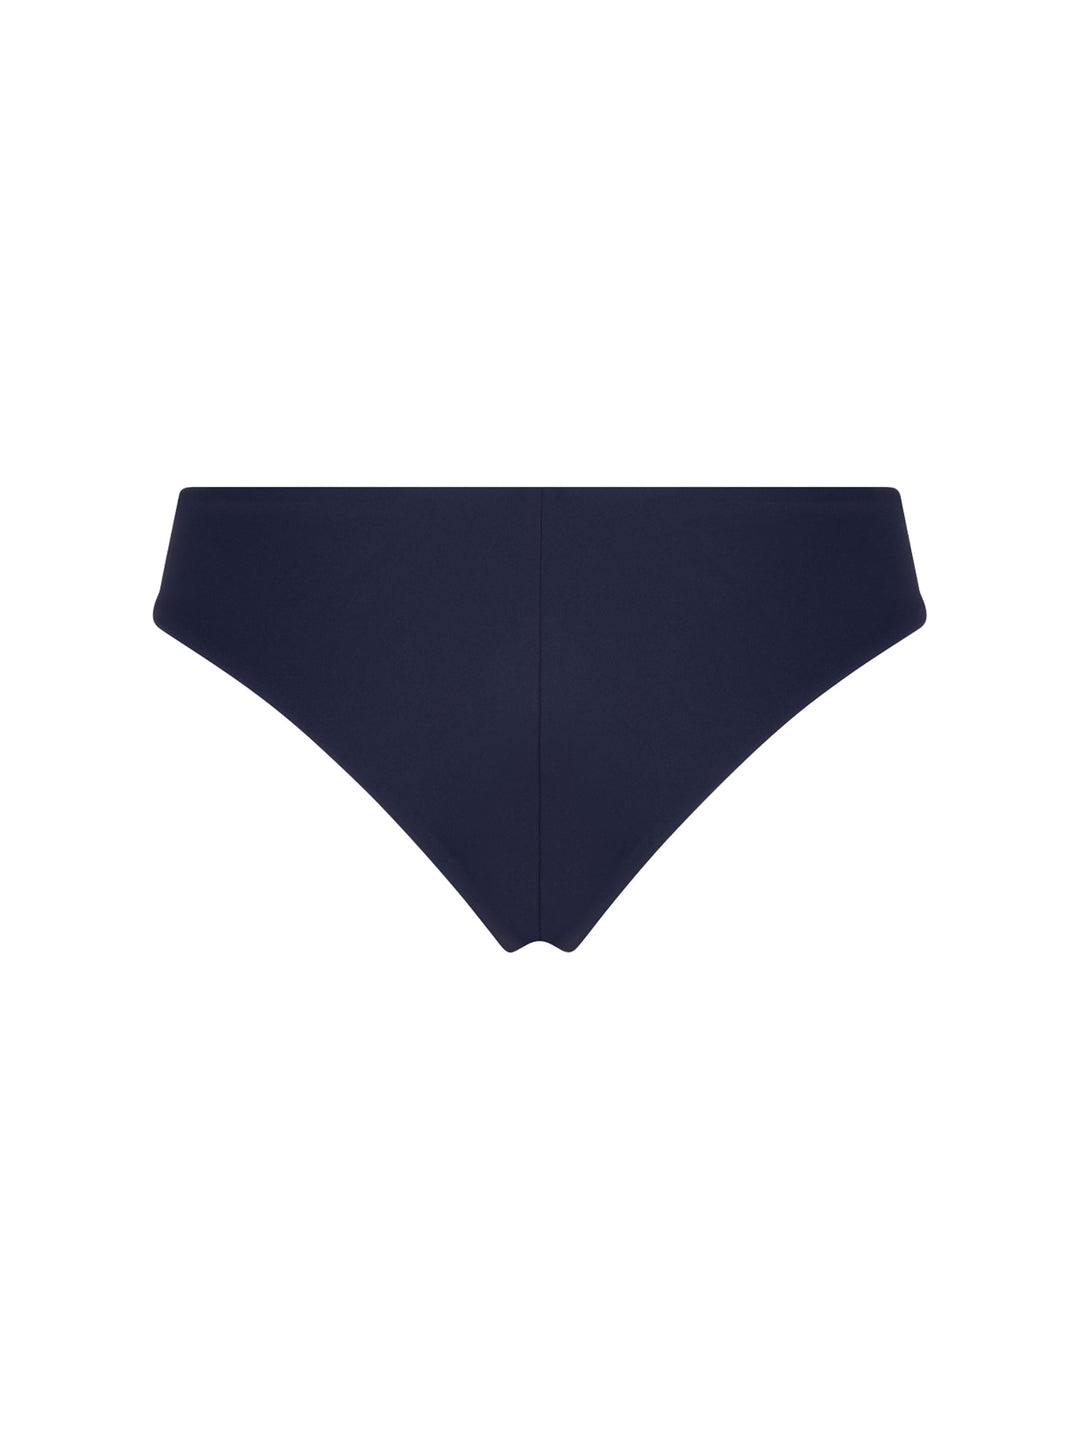 Antigel by Lise Charmel - La Chiquissima 比基尼丁字褲 Marine Mini Bikini Brief Antigel by Lise Charmel Swimwear